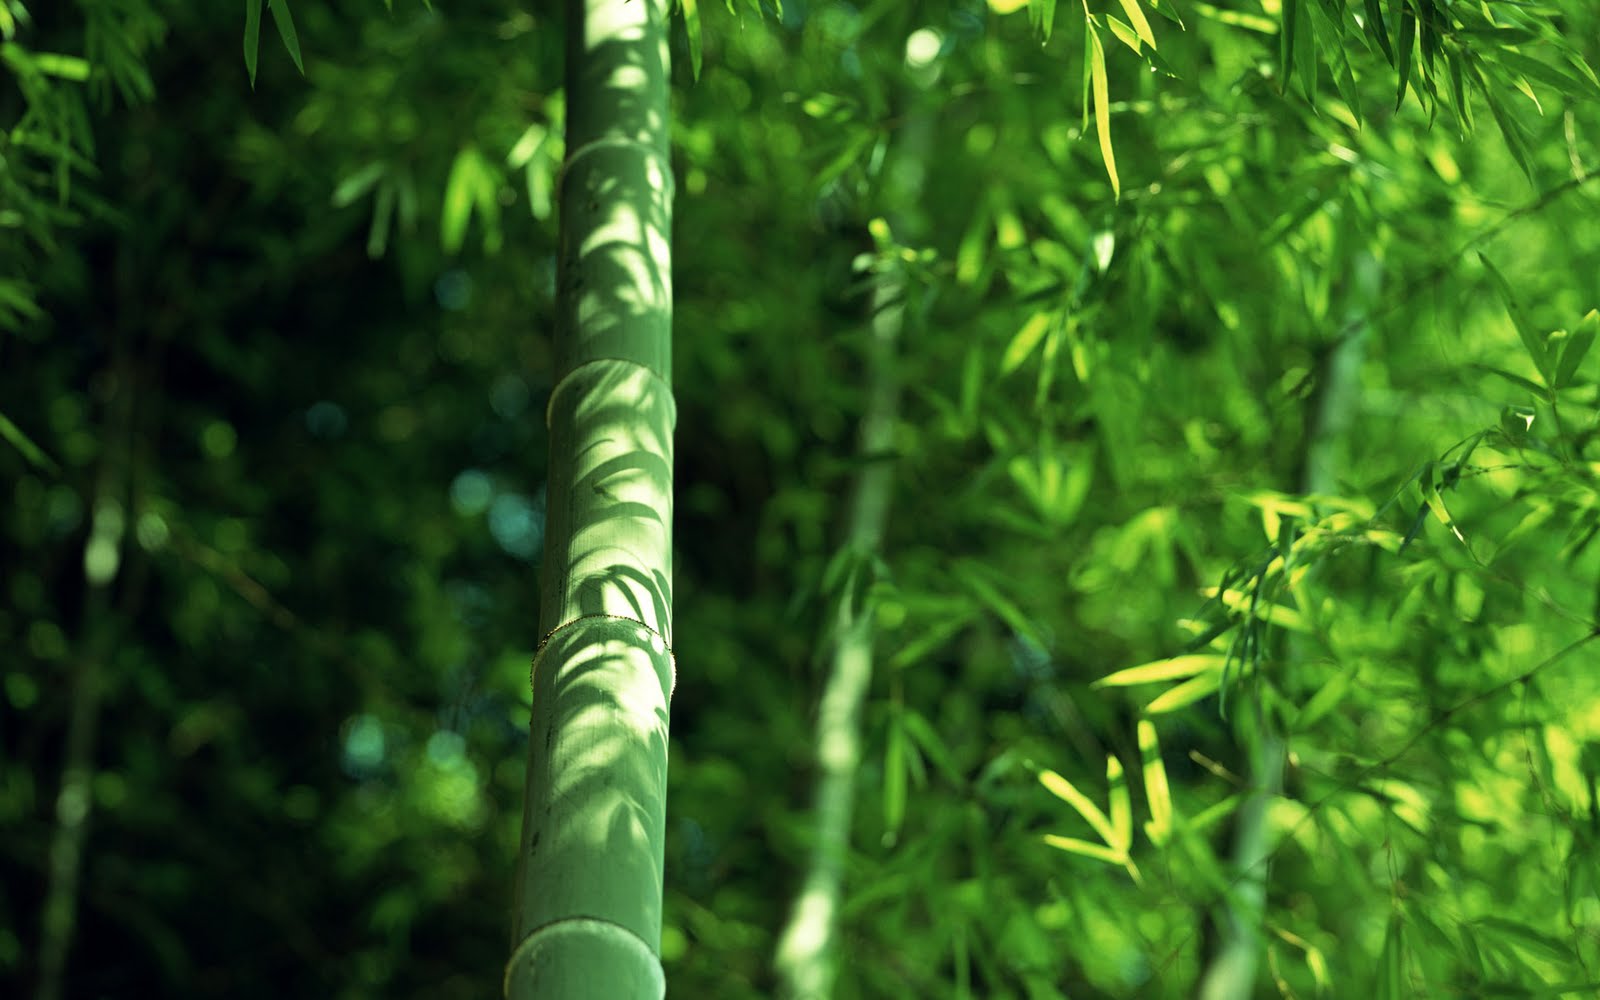 Forest High Definition bamboo design wallpaper bamboo pattern